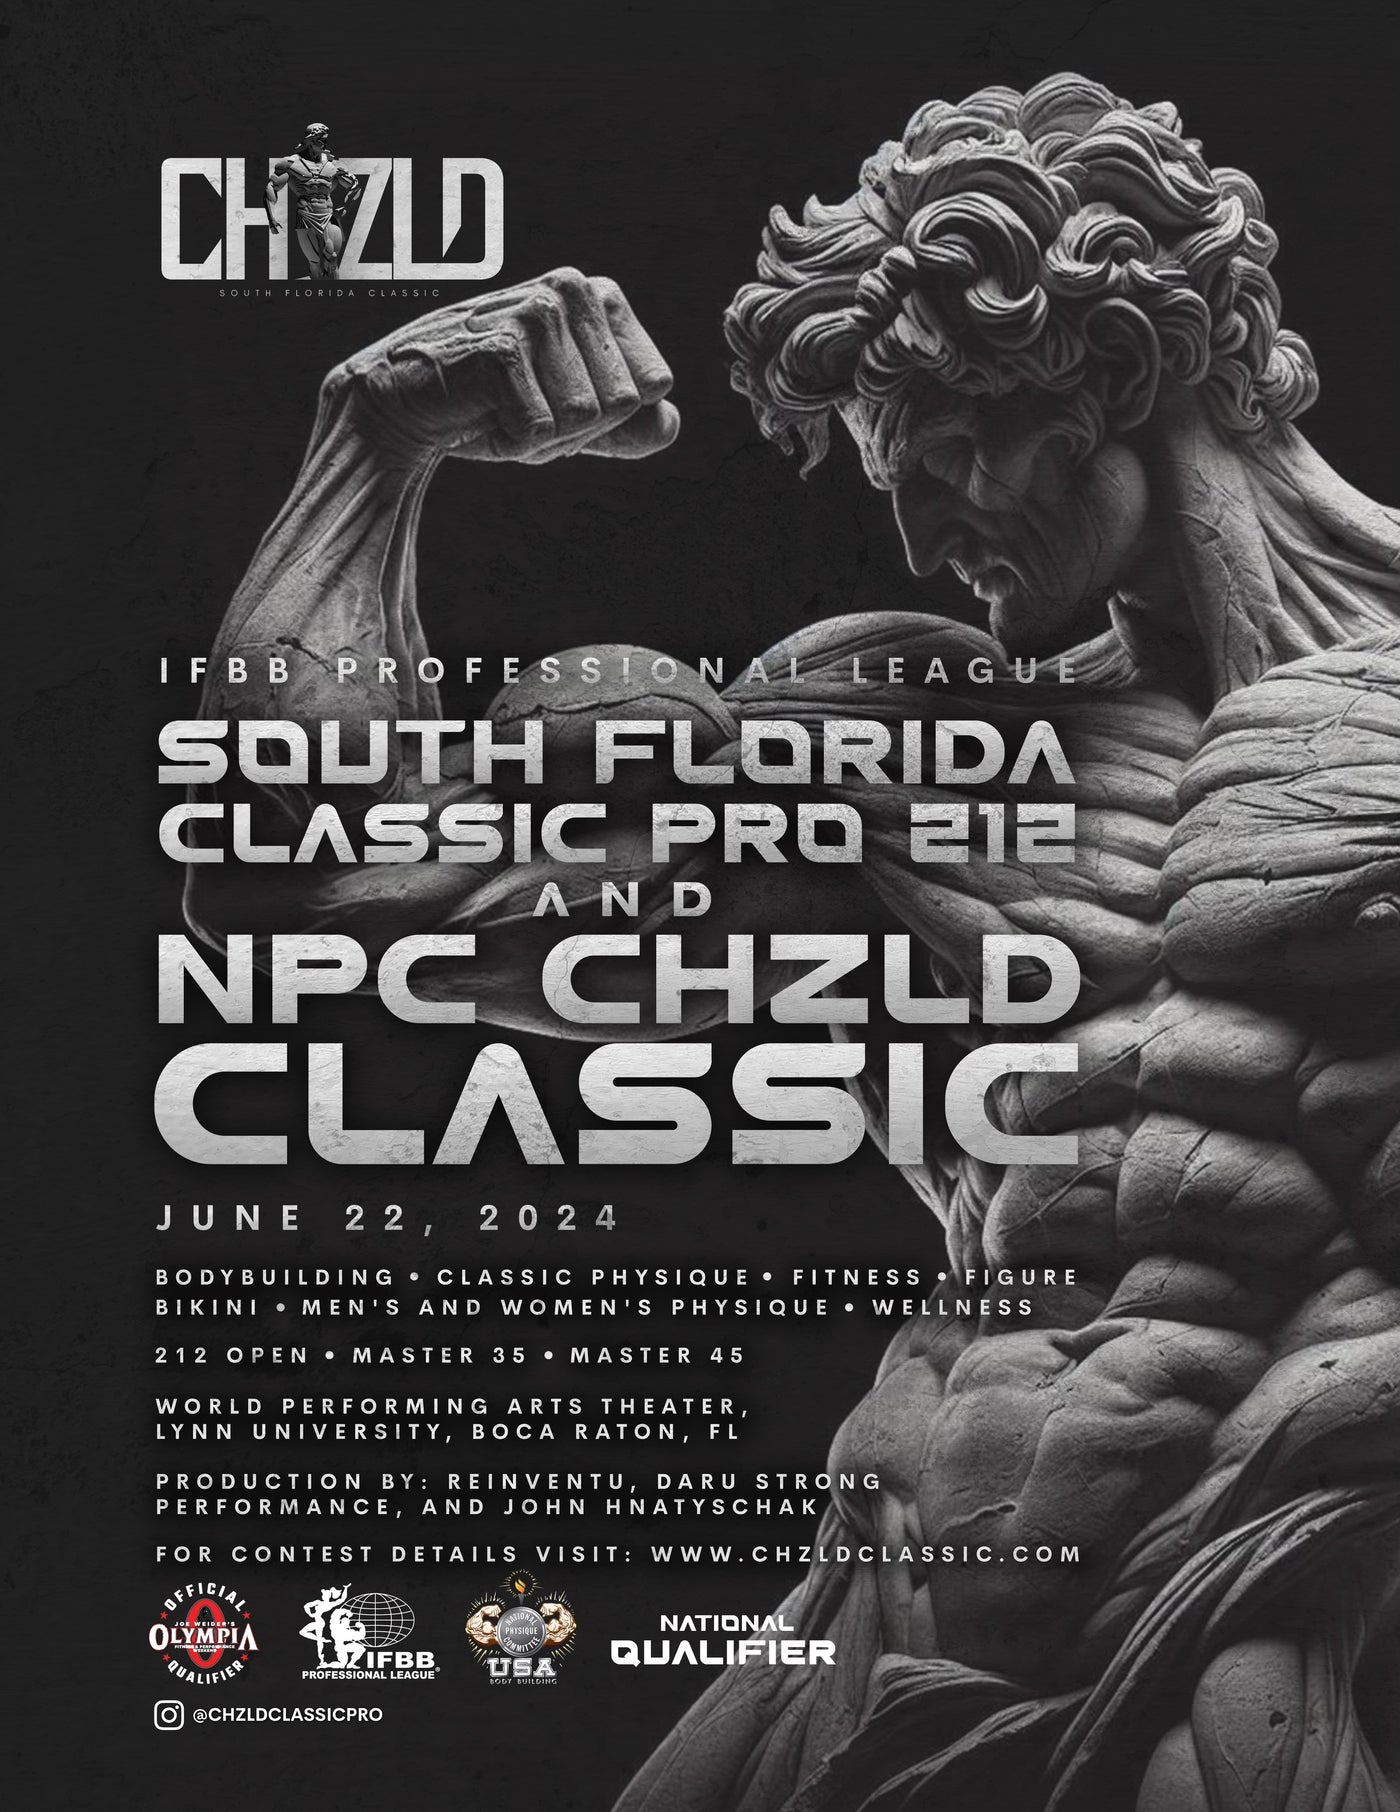 IFBB Pro League & NPC South Florida Classic Pro 212 & Chizld Classic Pro/Am